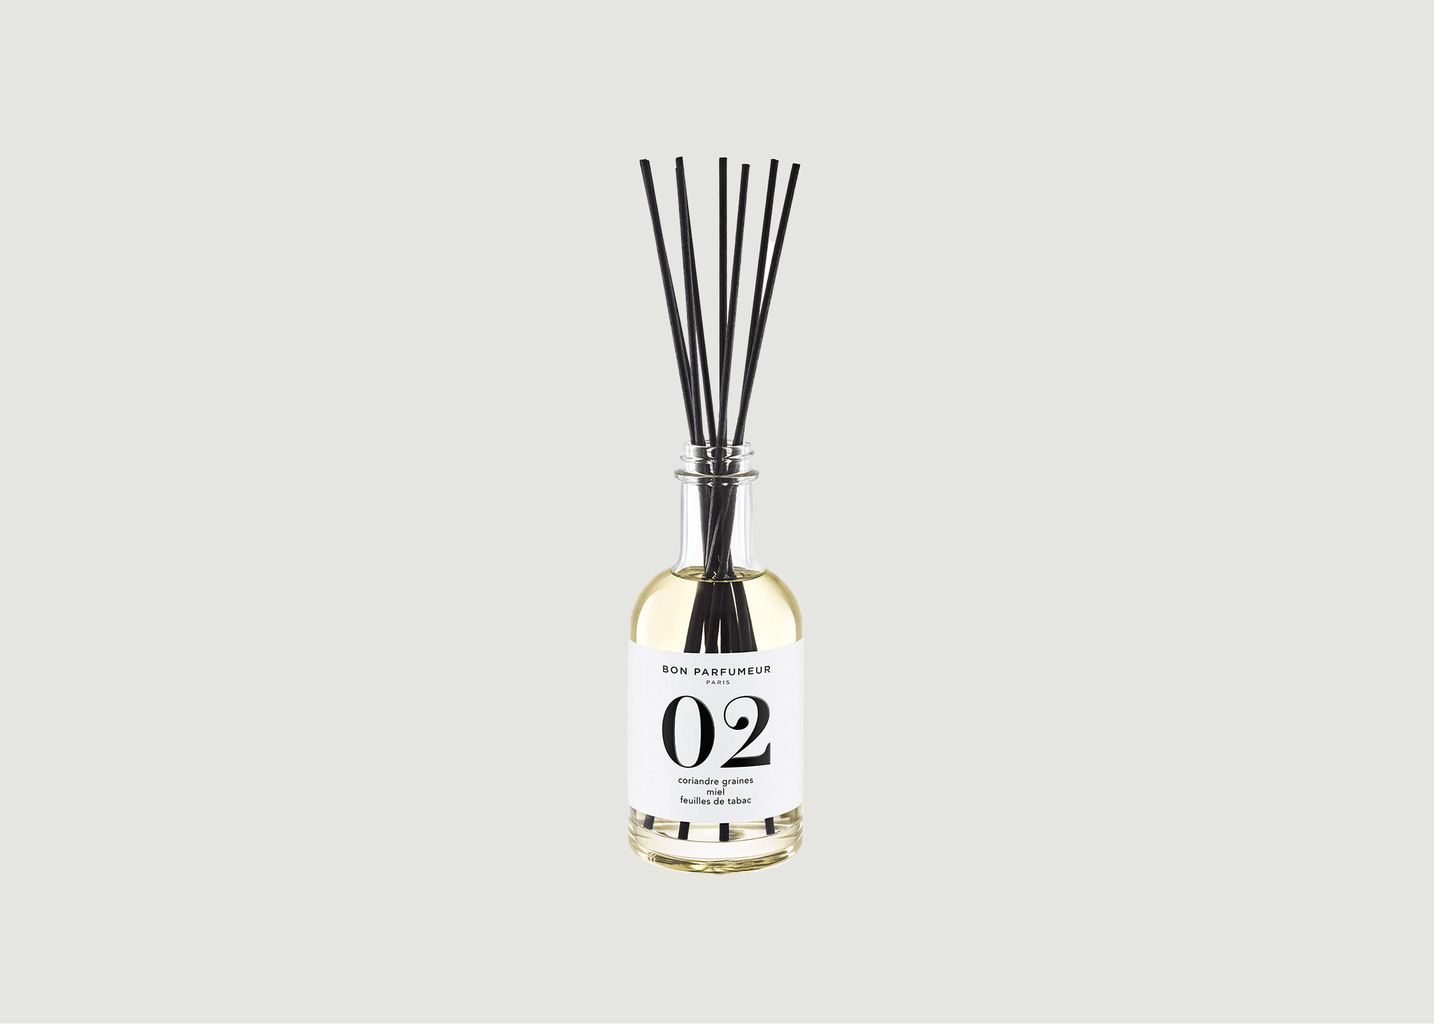 Bon Parfumeur Home Fragrance Diffuser 02 : Coriander Seeds, Honey And Tobacco Leaves